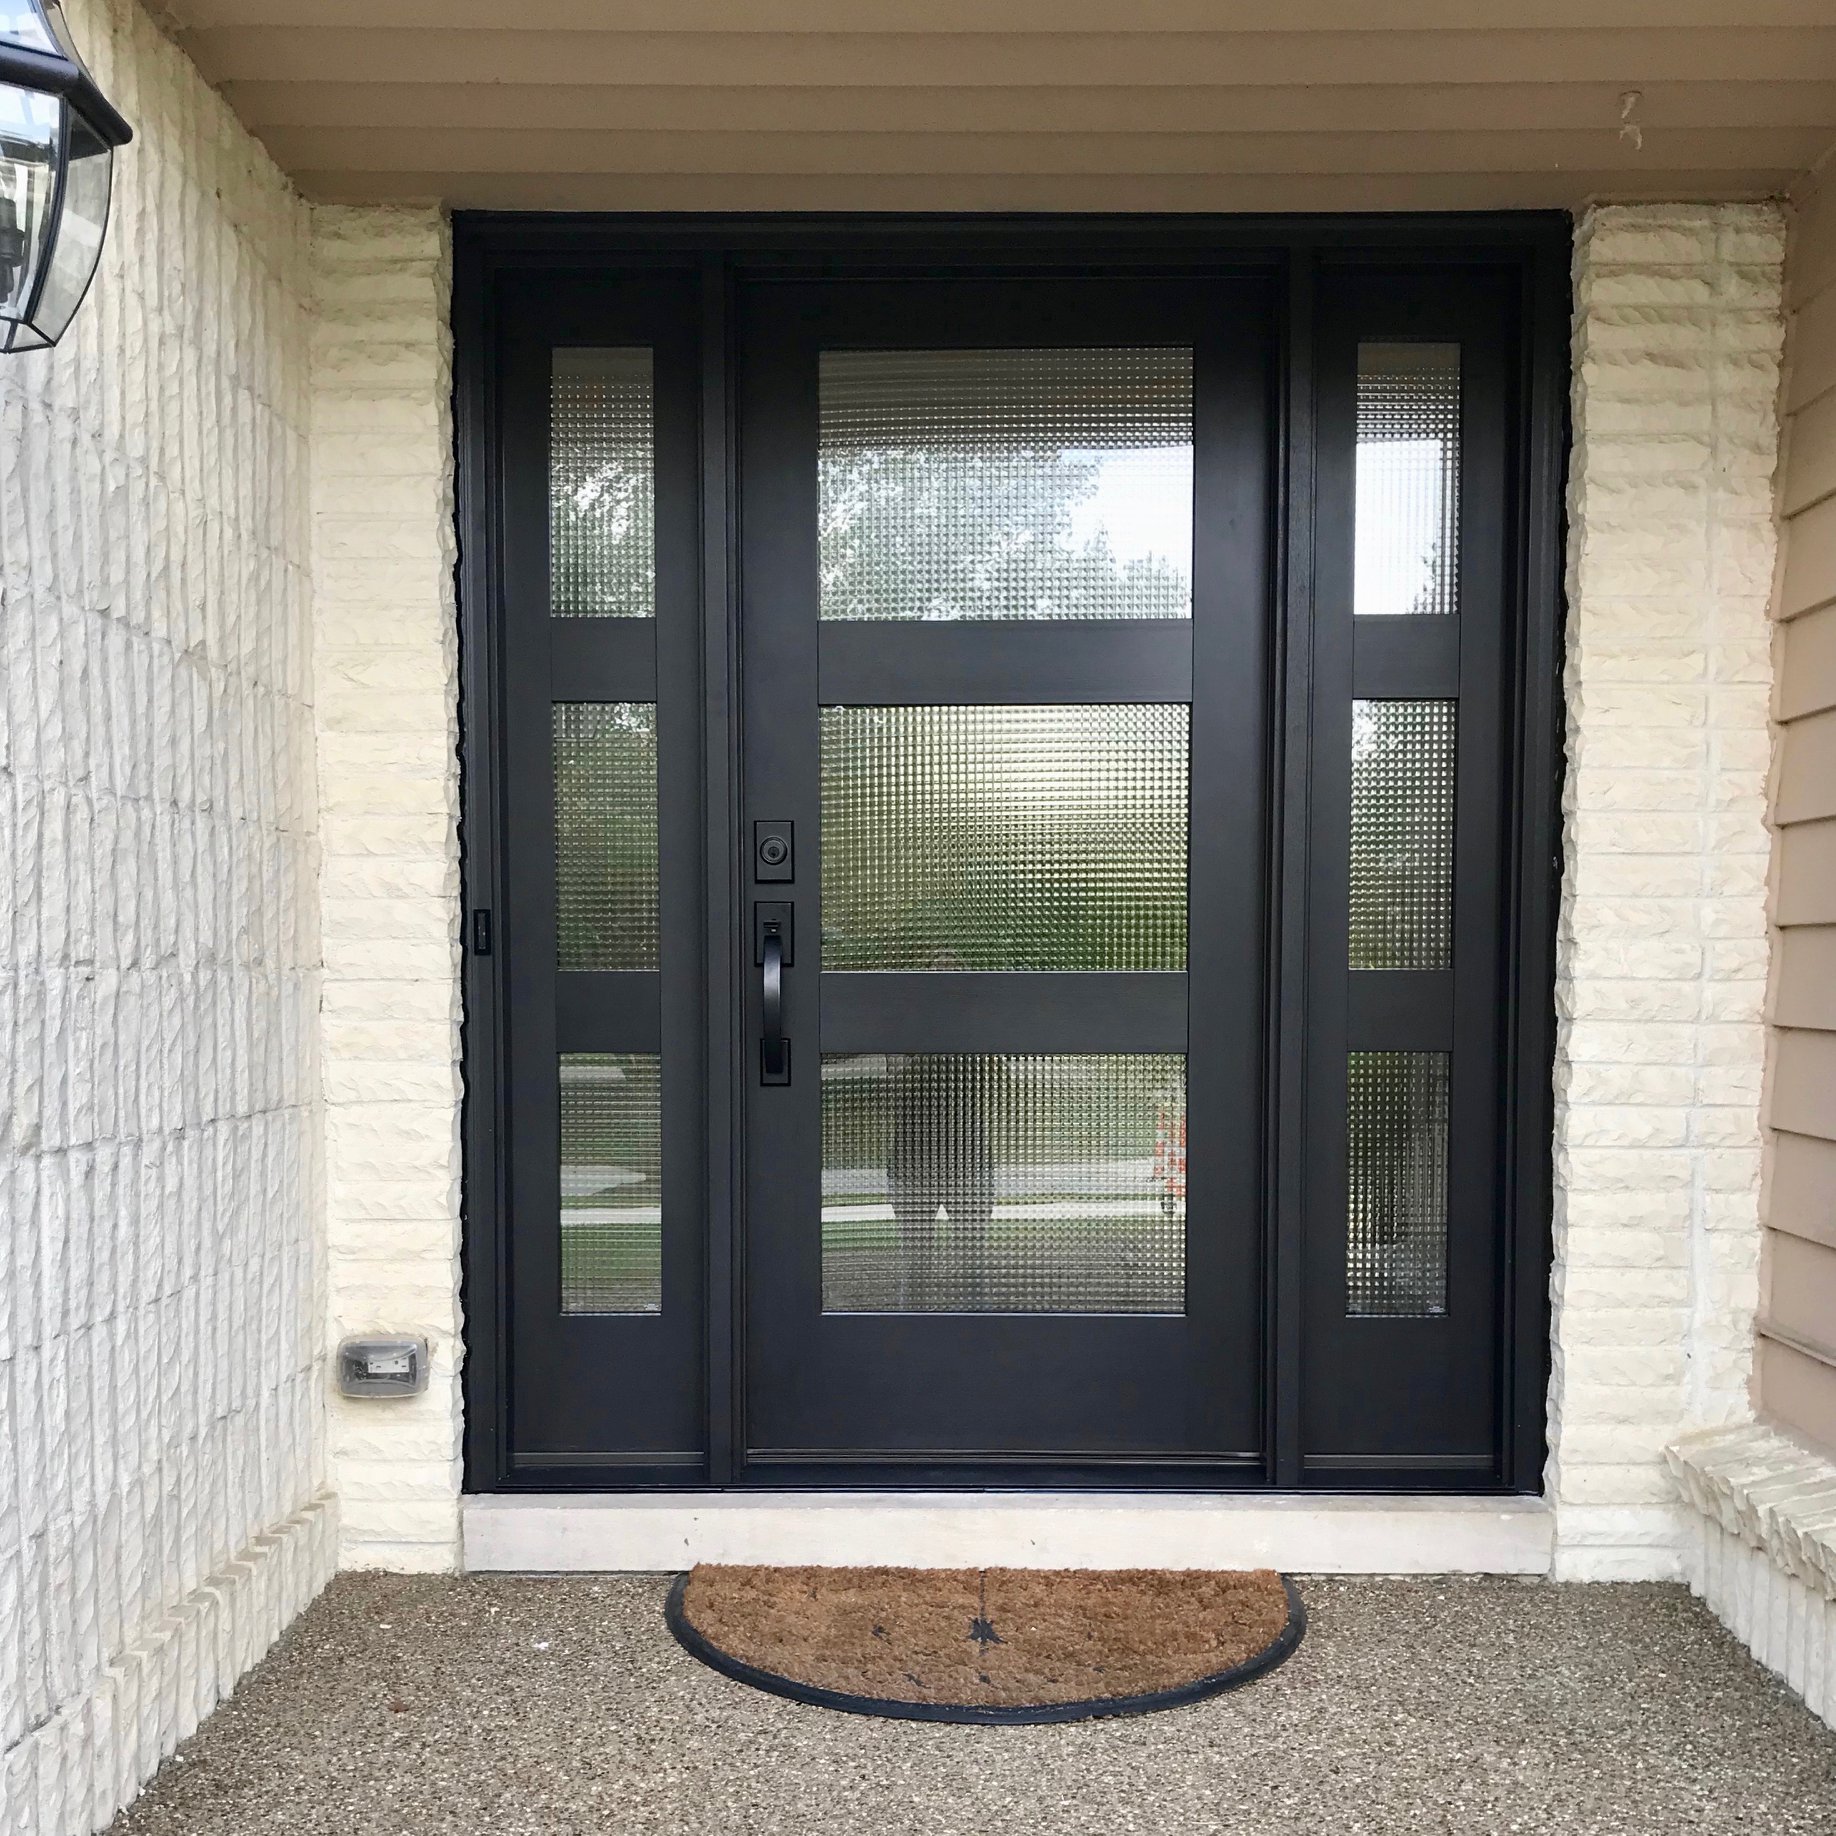 JK Unlimited Services installs - New Front Door